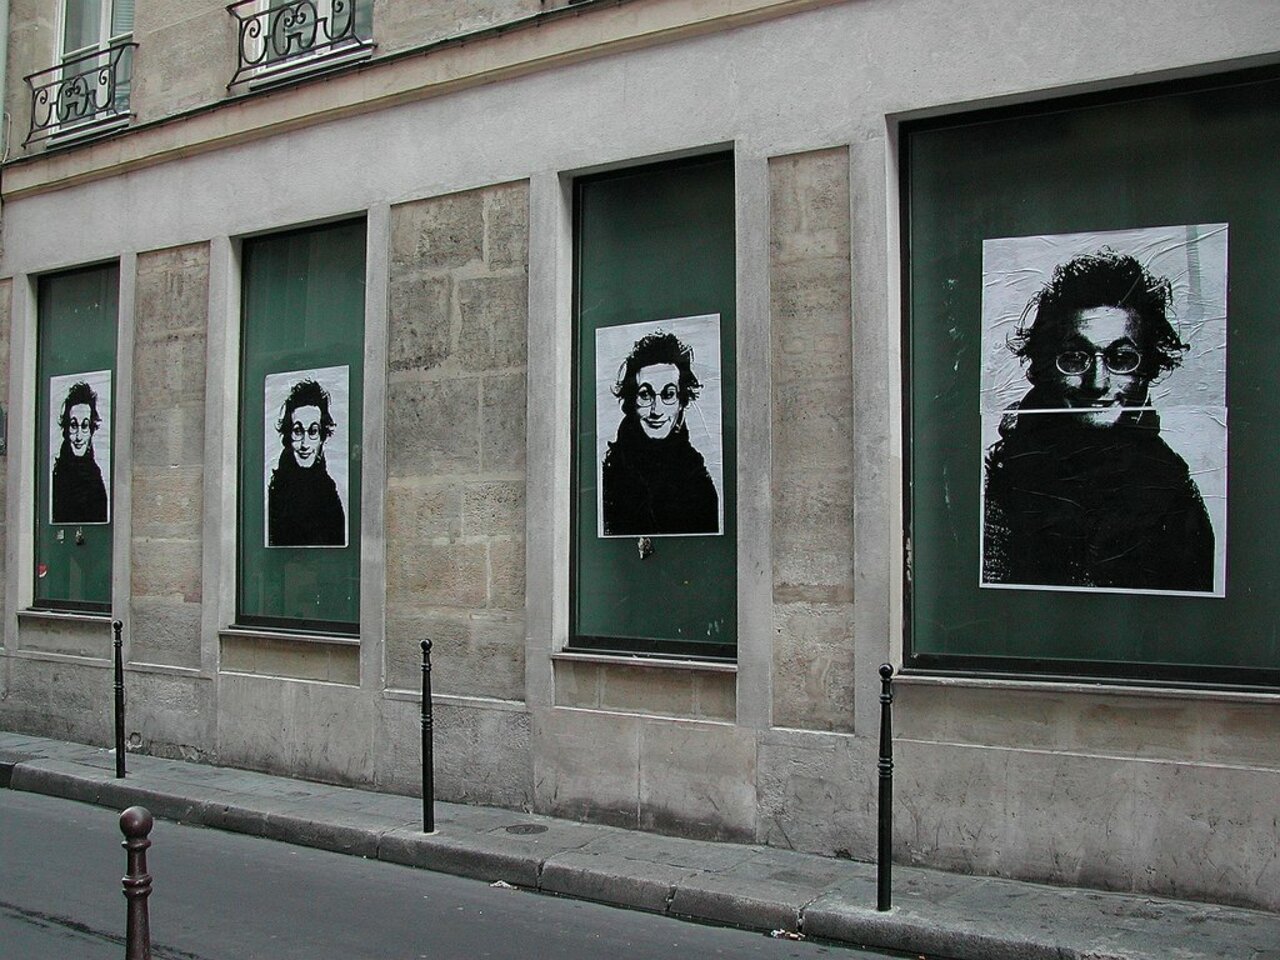 Street Art by Nojnoma in #Paris http://www.urbacolors.com #art #mural #graffiti #streetart https://t.co/AnPYgHF2ta